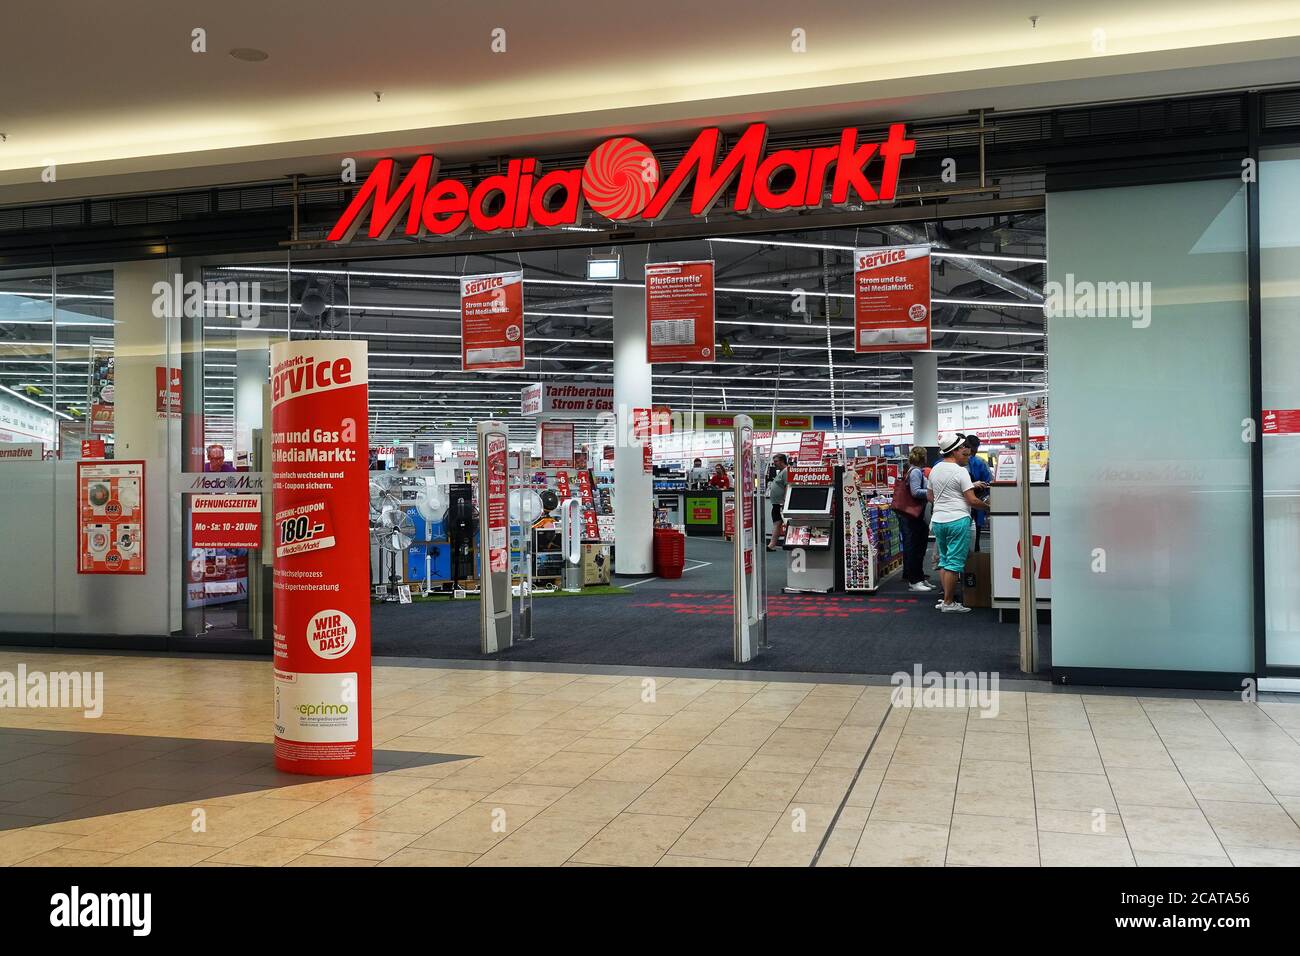 Branch of Media Markt store Stock Photo - Alamy